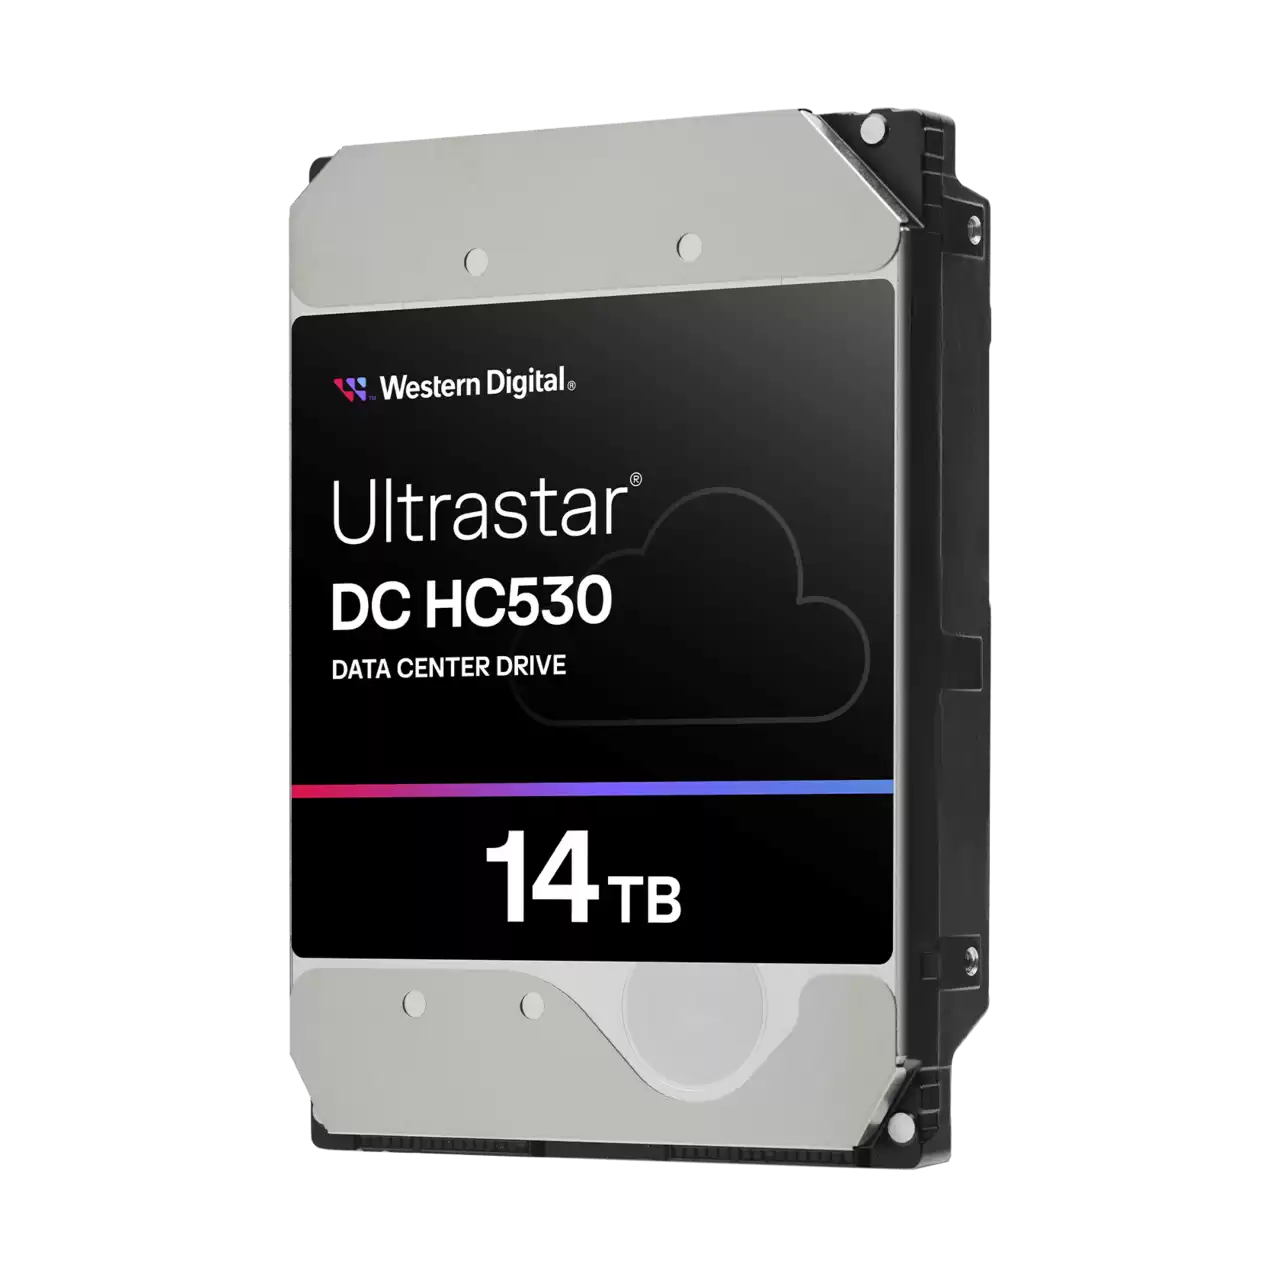 Ultrastar DC HC530